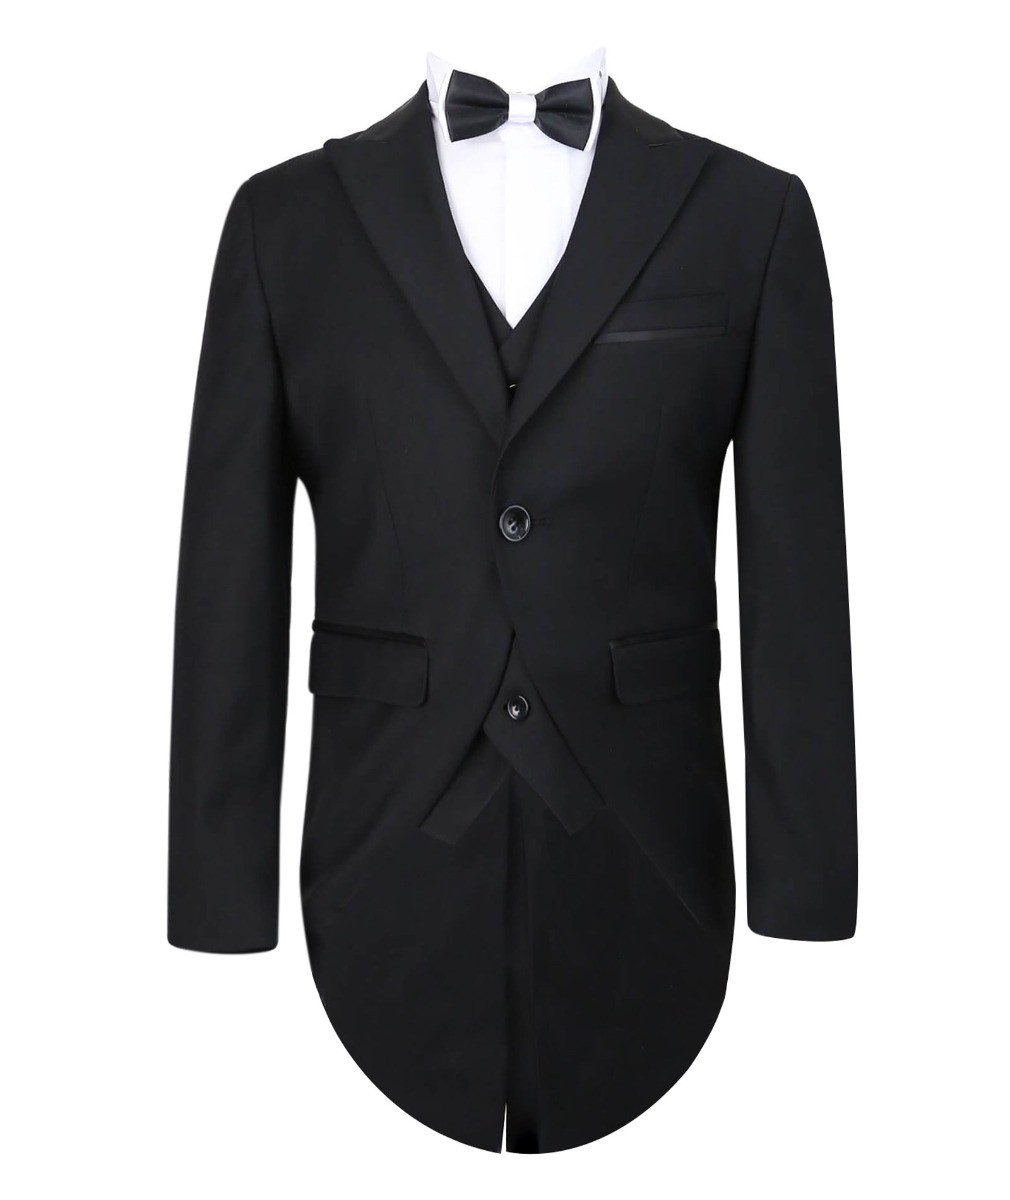 Boys Black Morning Tailcoat Suit Set - Black